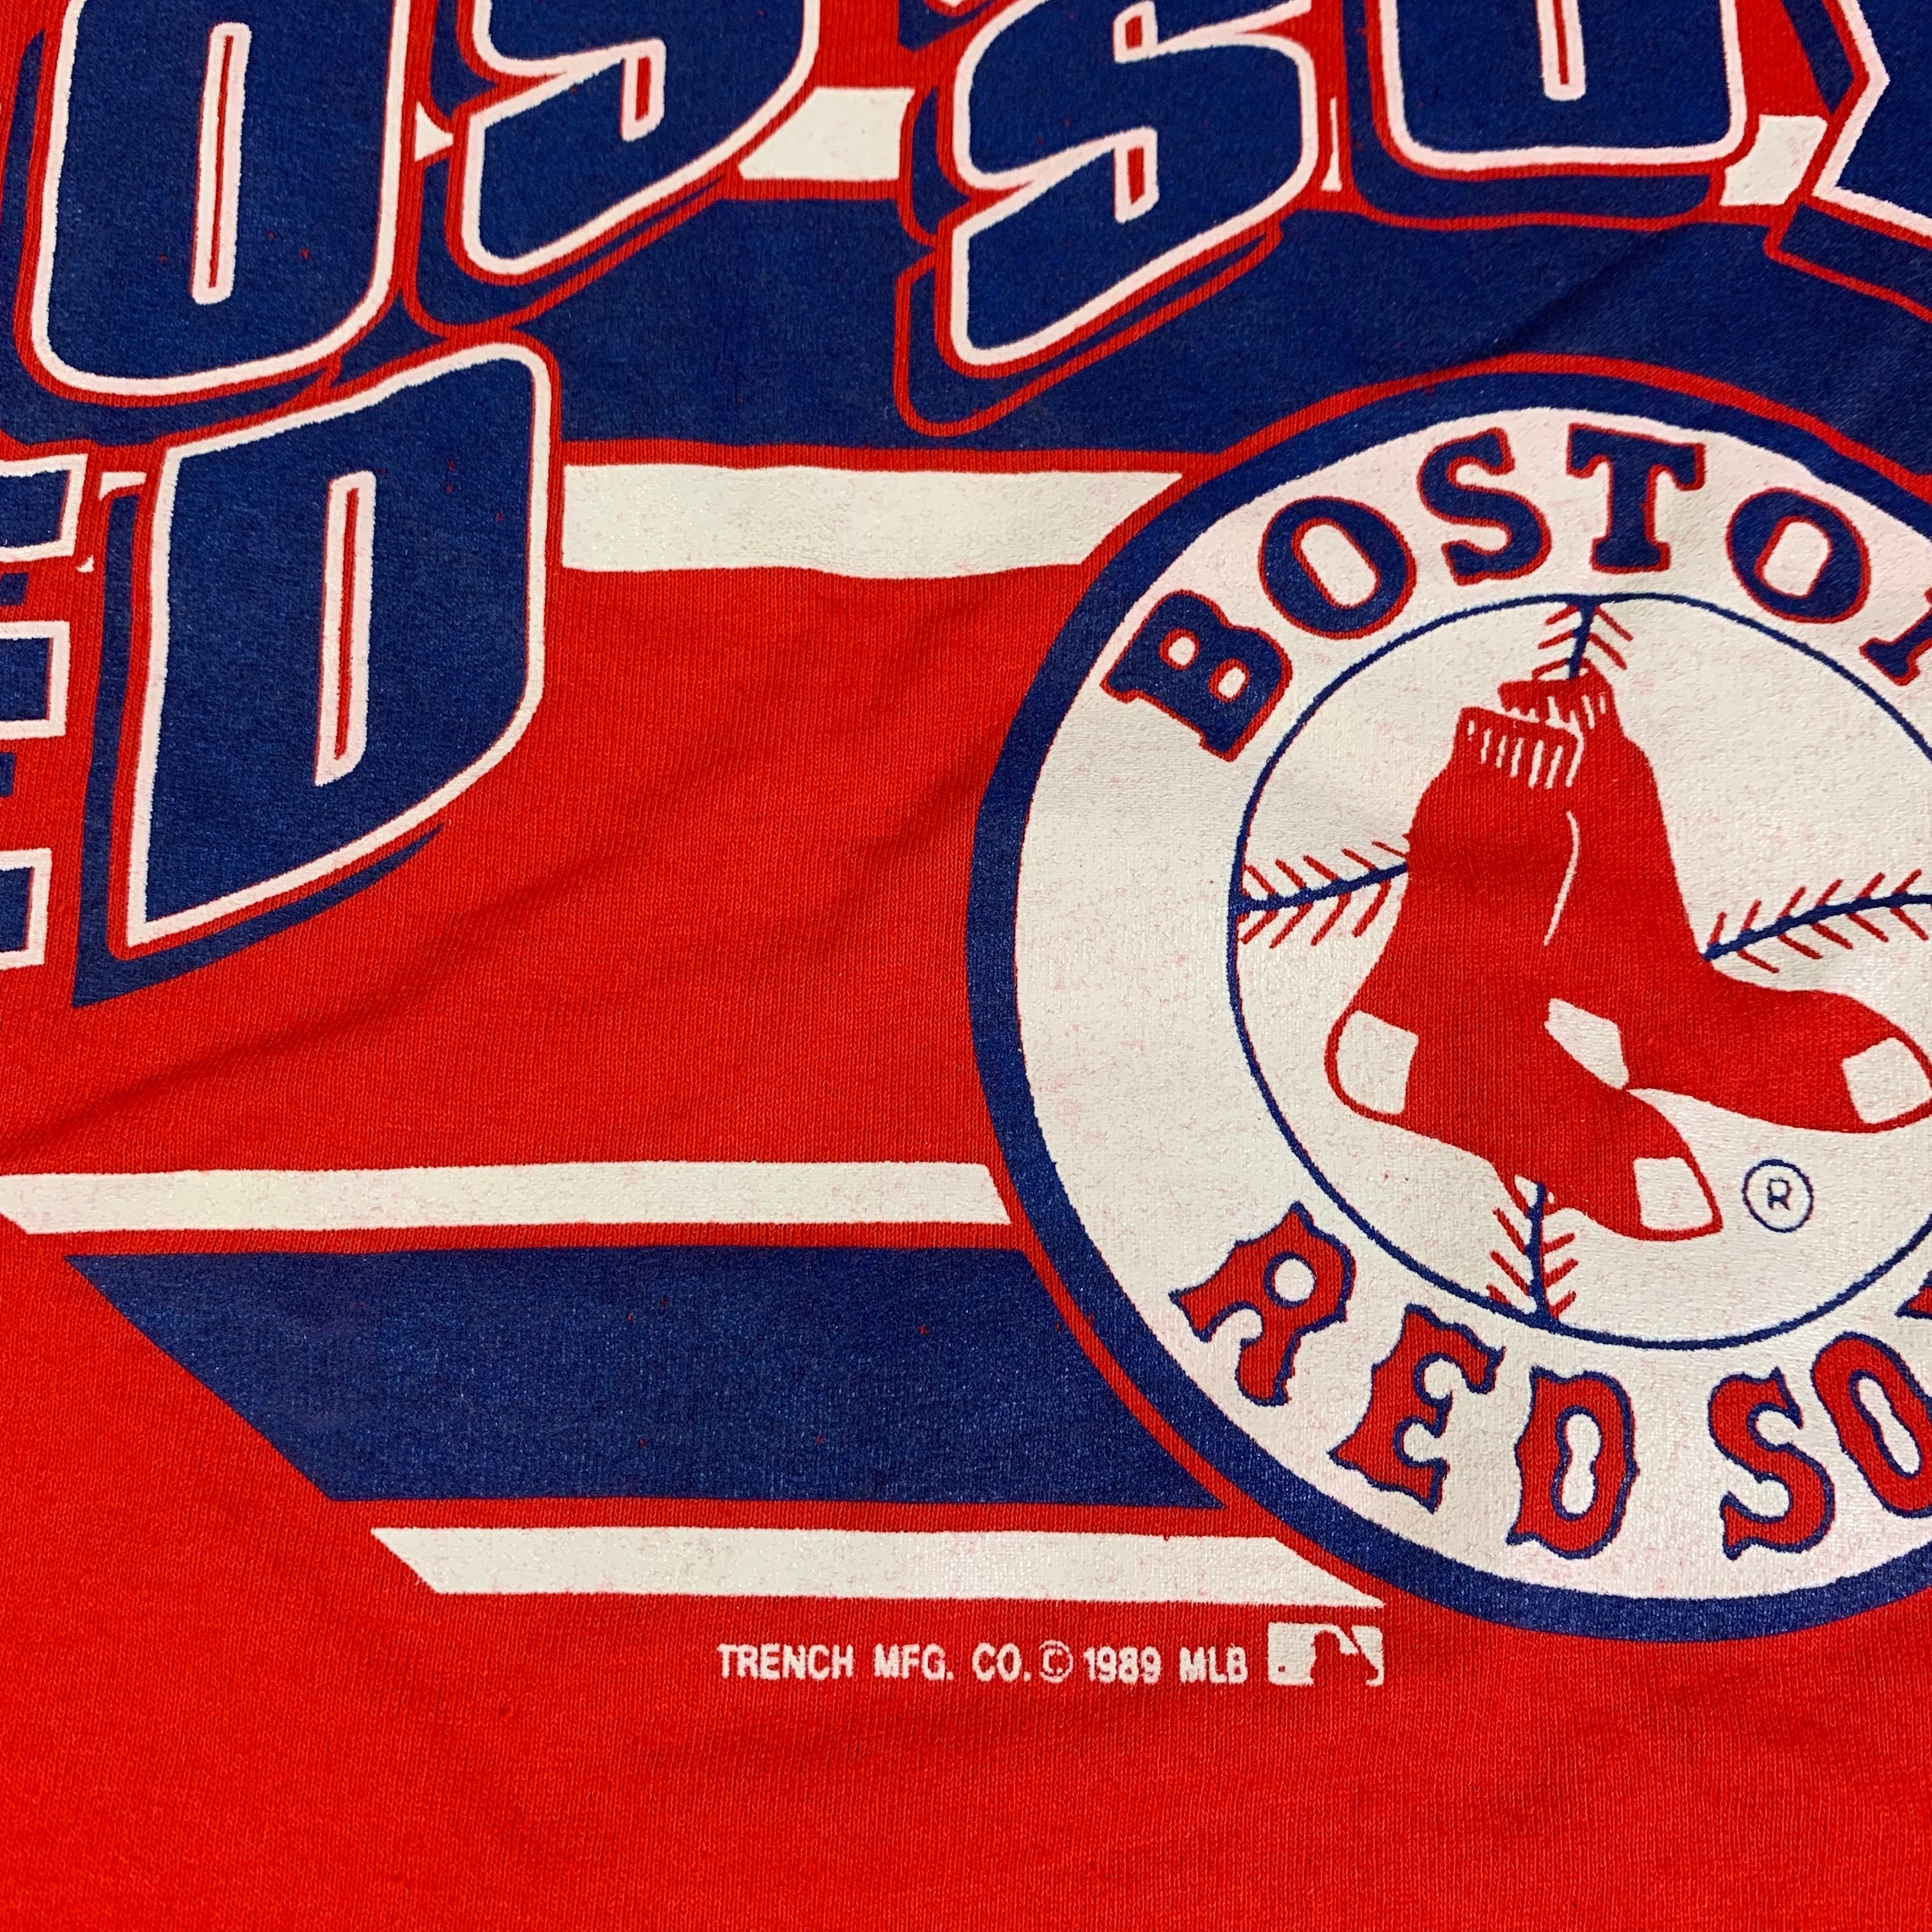 Vintage Boston Red Sox Tee – Rethread